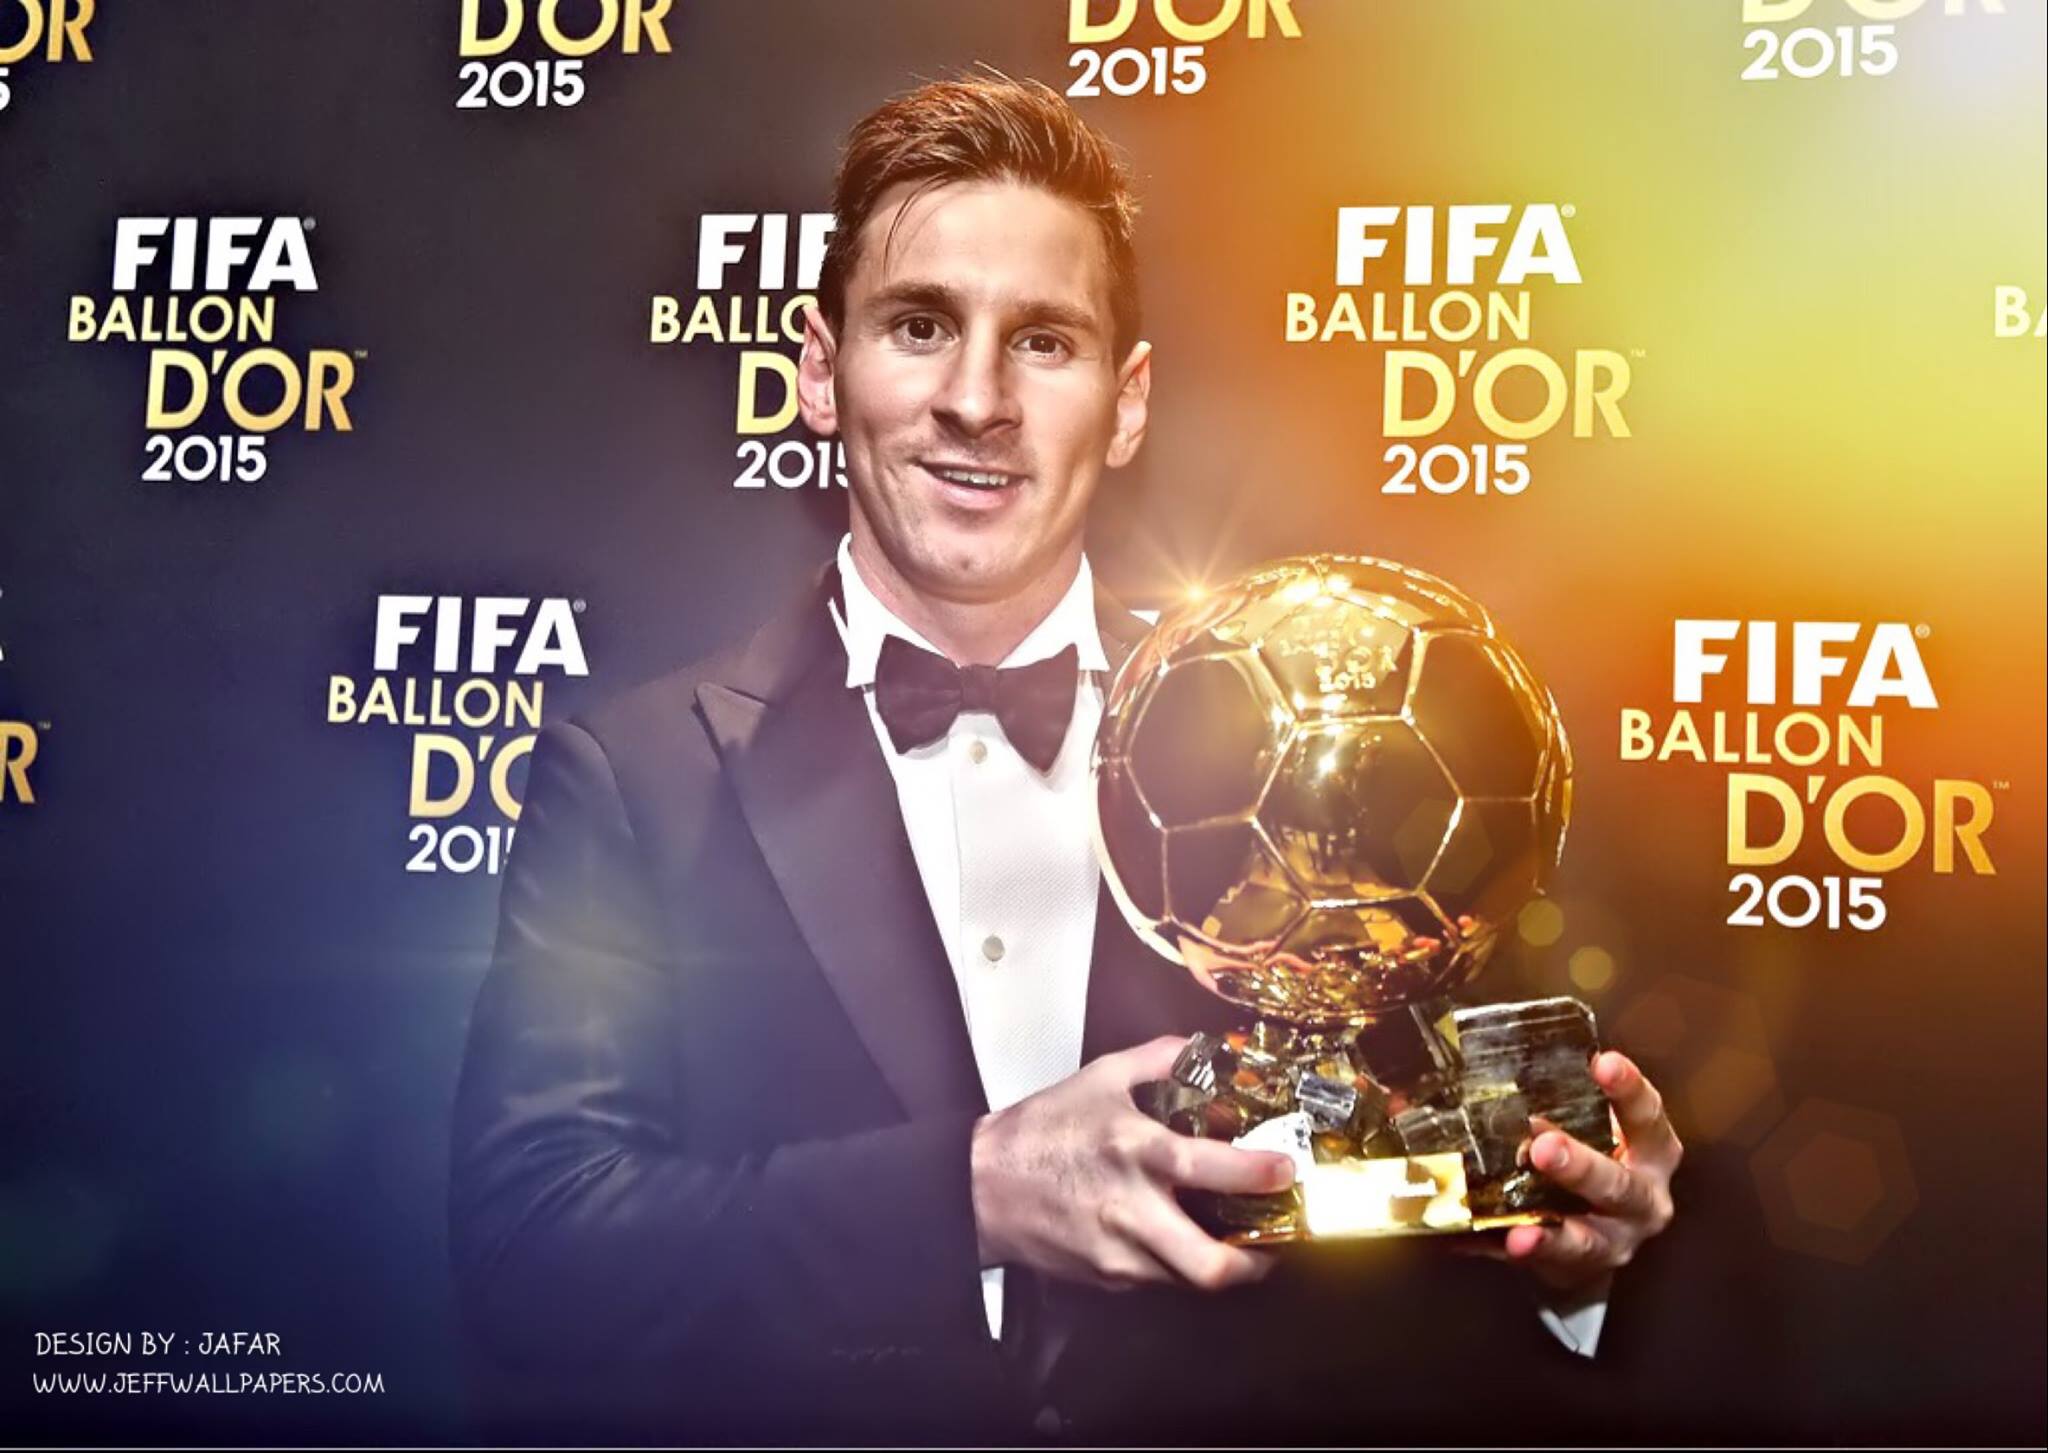 Lionel Messi FIFA Ballon d&2015 winner Wallpapers free desktop